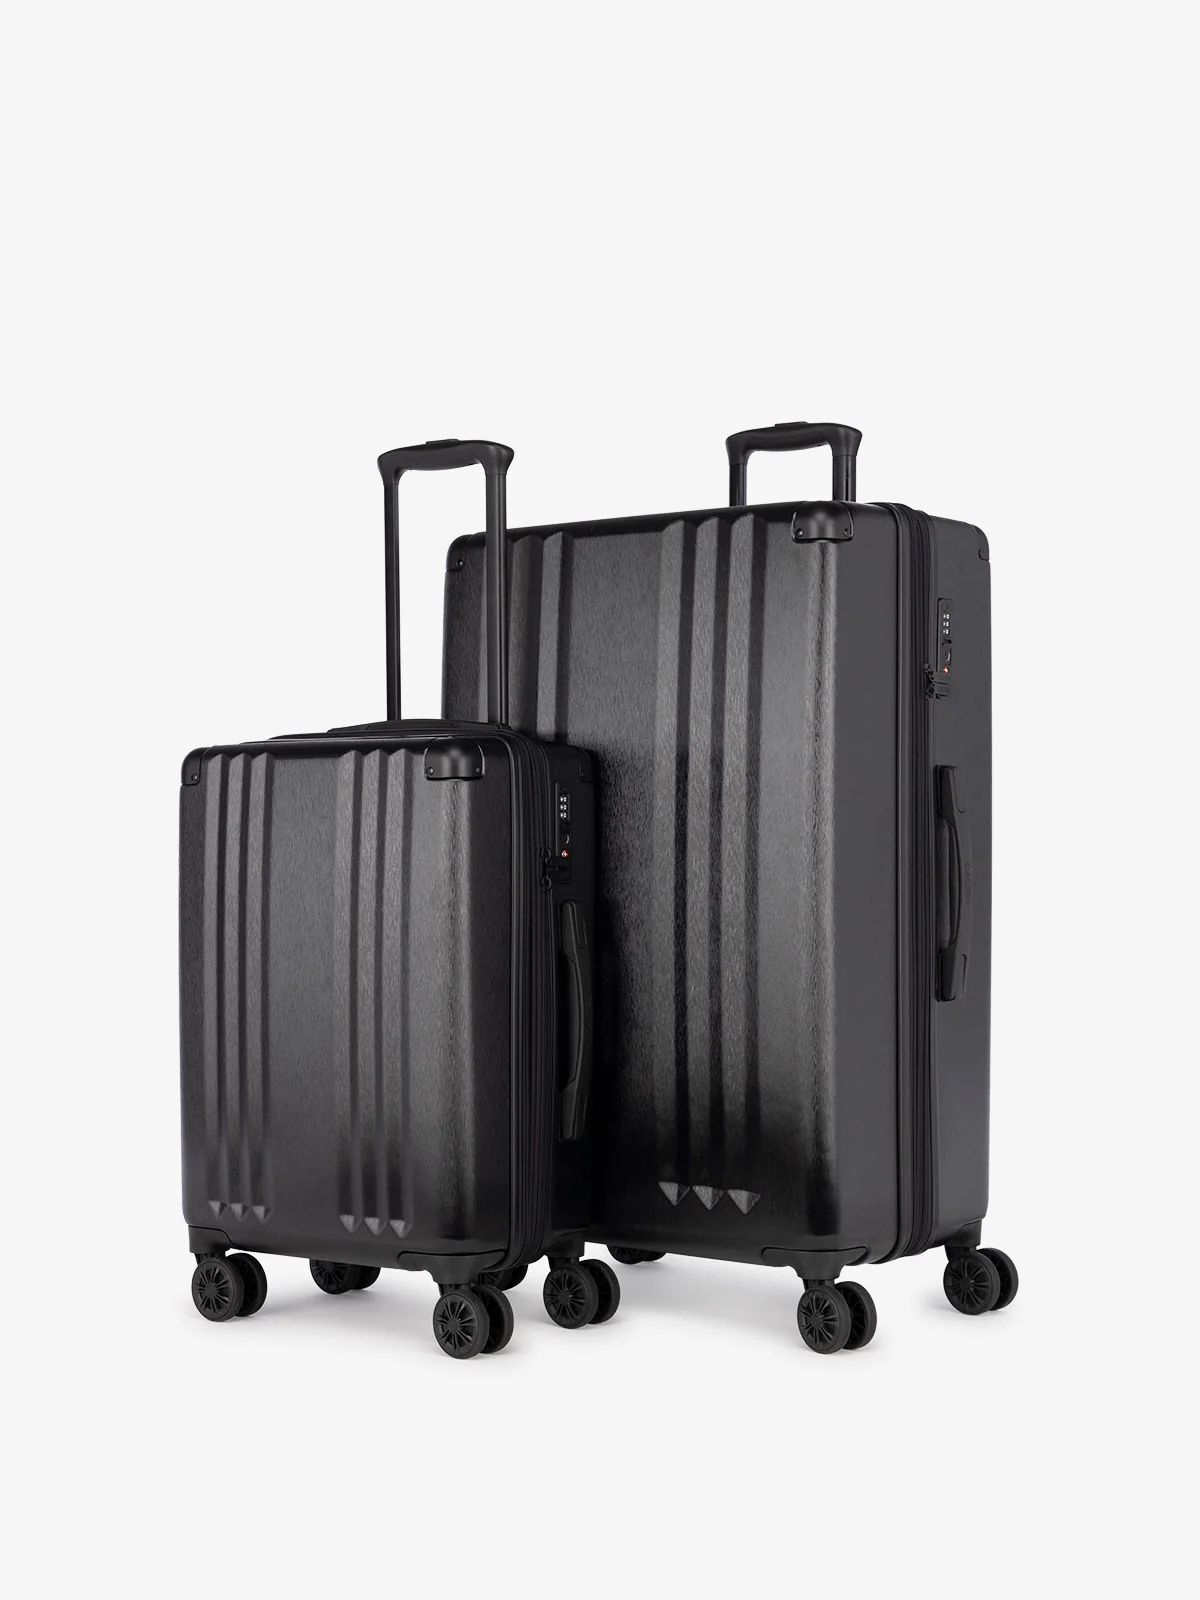 Ambeur 2-Piece Luggage Set in Silver | CALPAK | CALPAK Travel